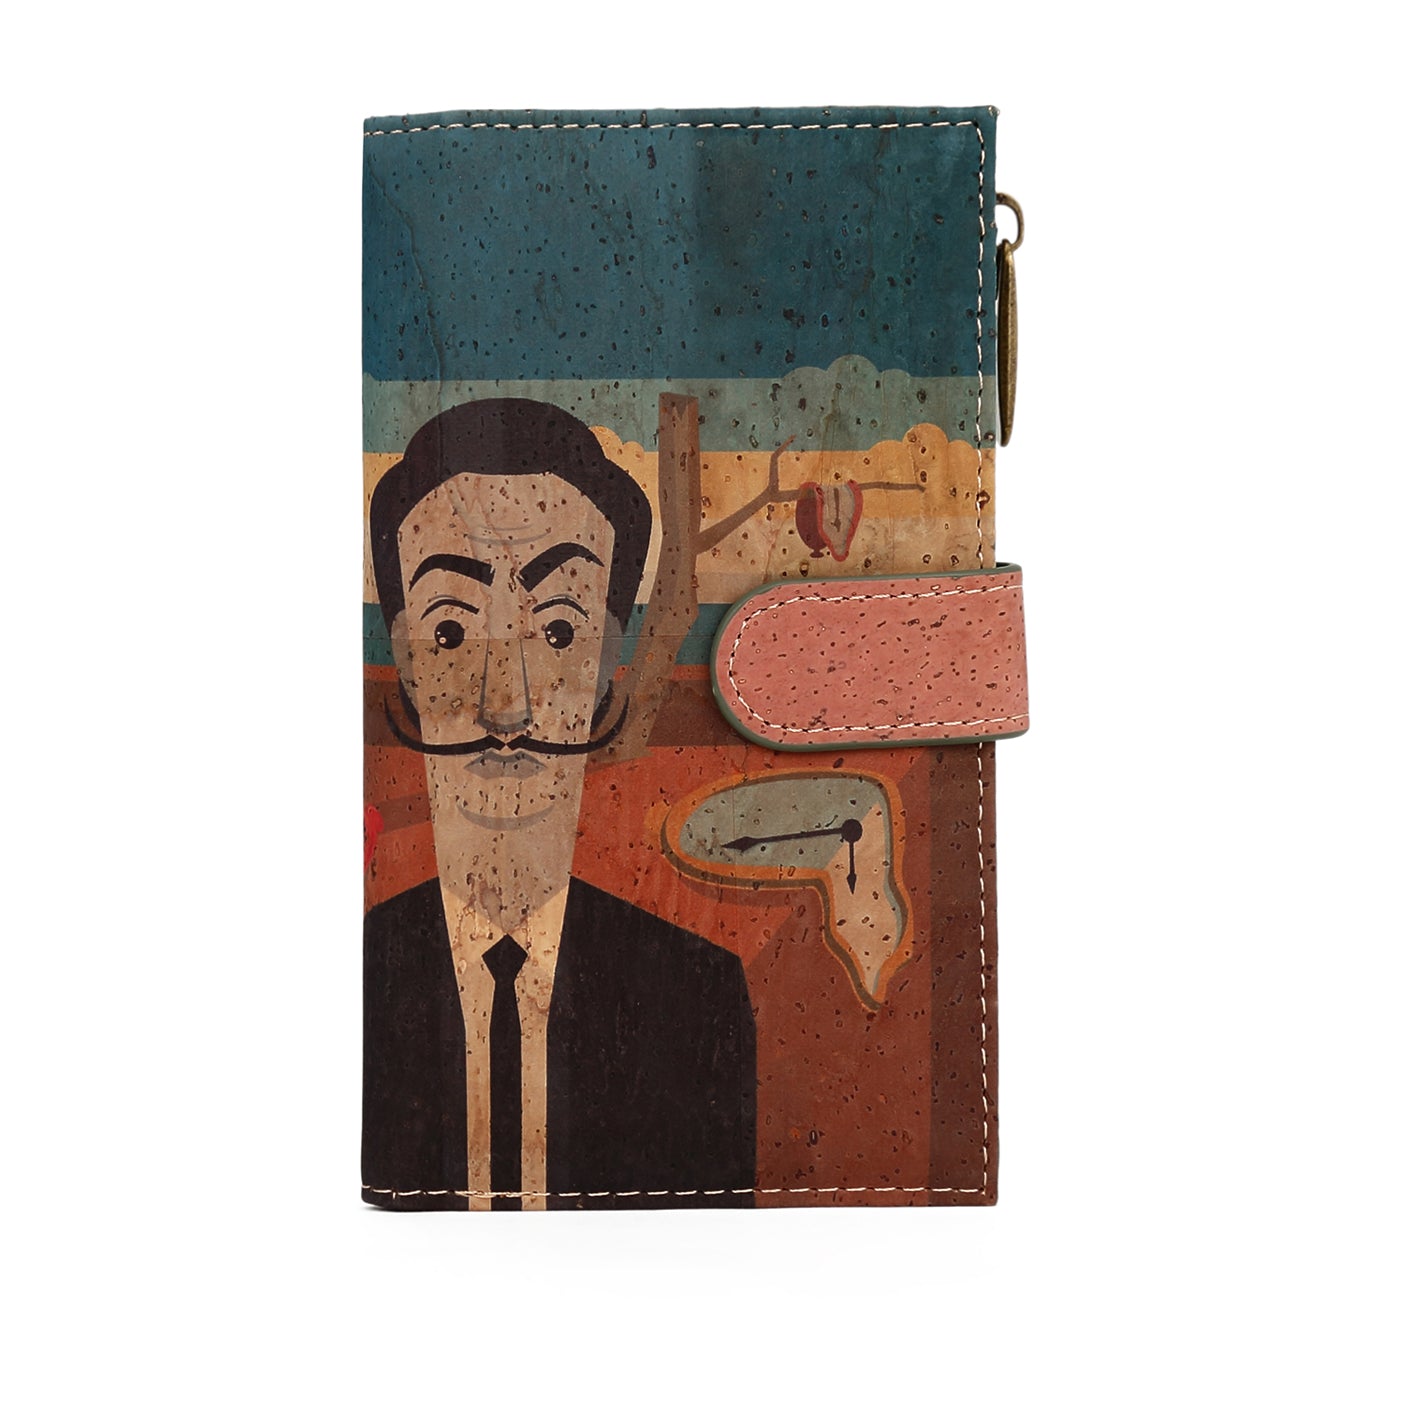 Frida cork zipped wallet